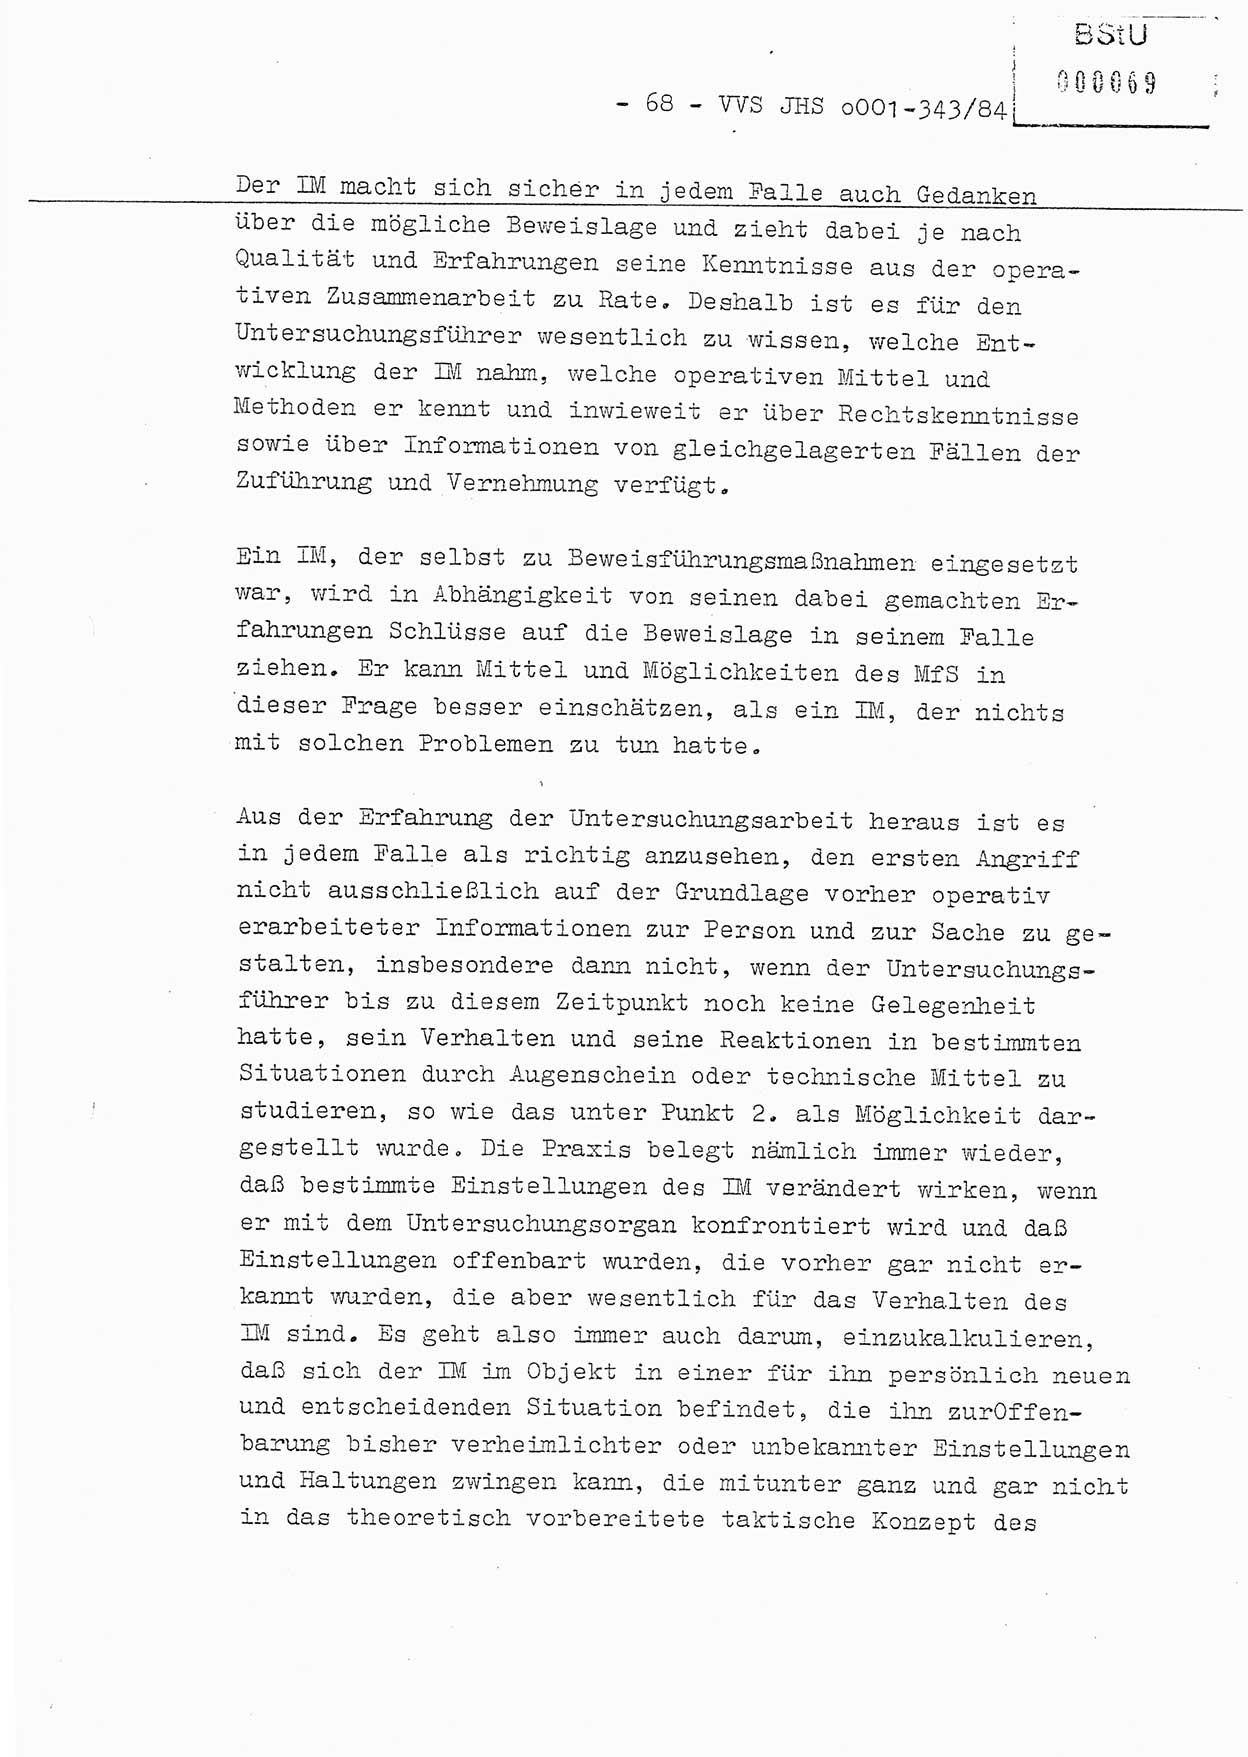 Diplomarbeit, Oberleutnant Bernd Michael (HA Ⅸ/5), Oberleutnant Peter Felber (HA IX/5), Ministerium für Staatssicherheit (MfS) [Deutsche Demokratische Republik (DDR)], Juristische Hochschule (JHS), Vertrauliche Verschlußsache (VVS) o001-343/84, Potsdam 1985, Seite 68 (Dipl.-Arb. MfS DDR JHS VVS o001-343/84 1985, S. 68)